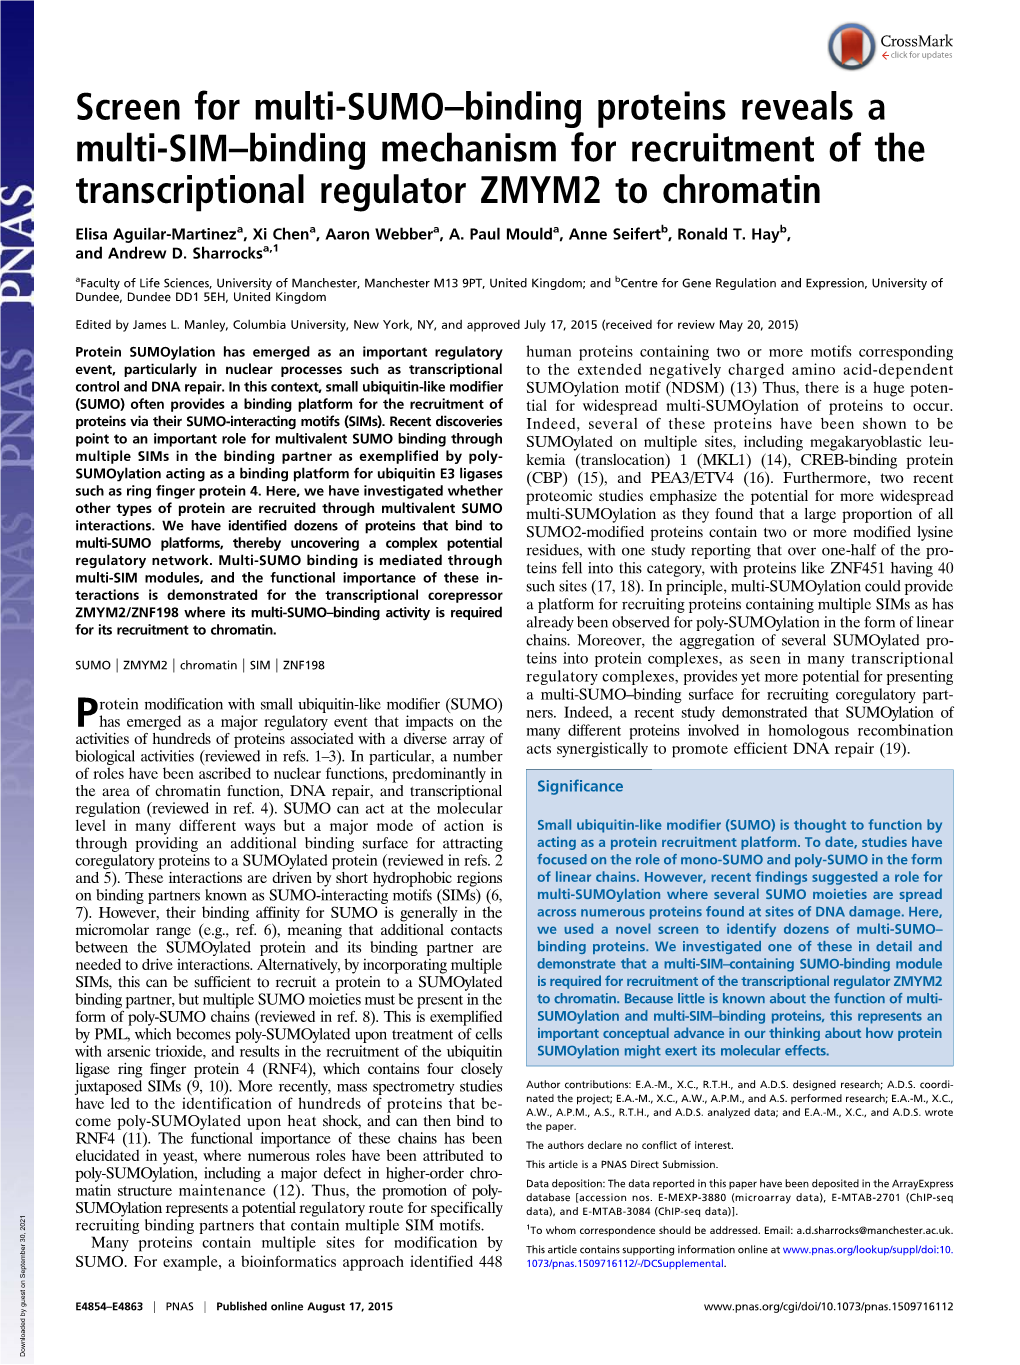 Screen for Multi-SUMO–Binding Proteins Reveals a Multi-SIM–Binding Mechanism for Recruitment of the Transcriptional Regulator ZMYM2 to Chromatin